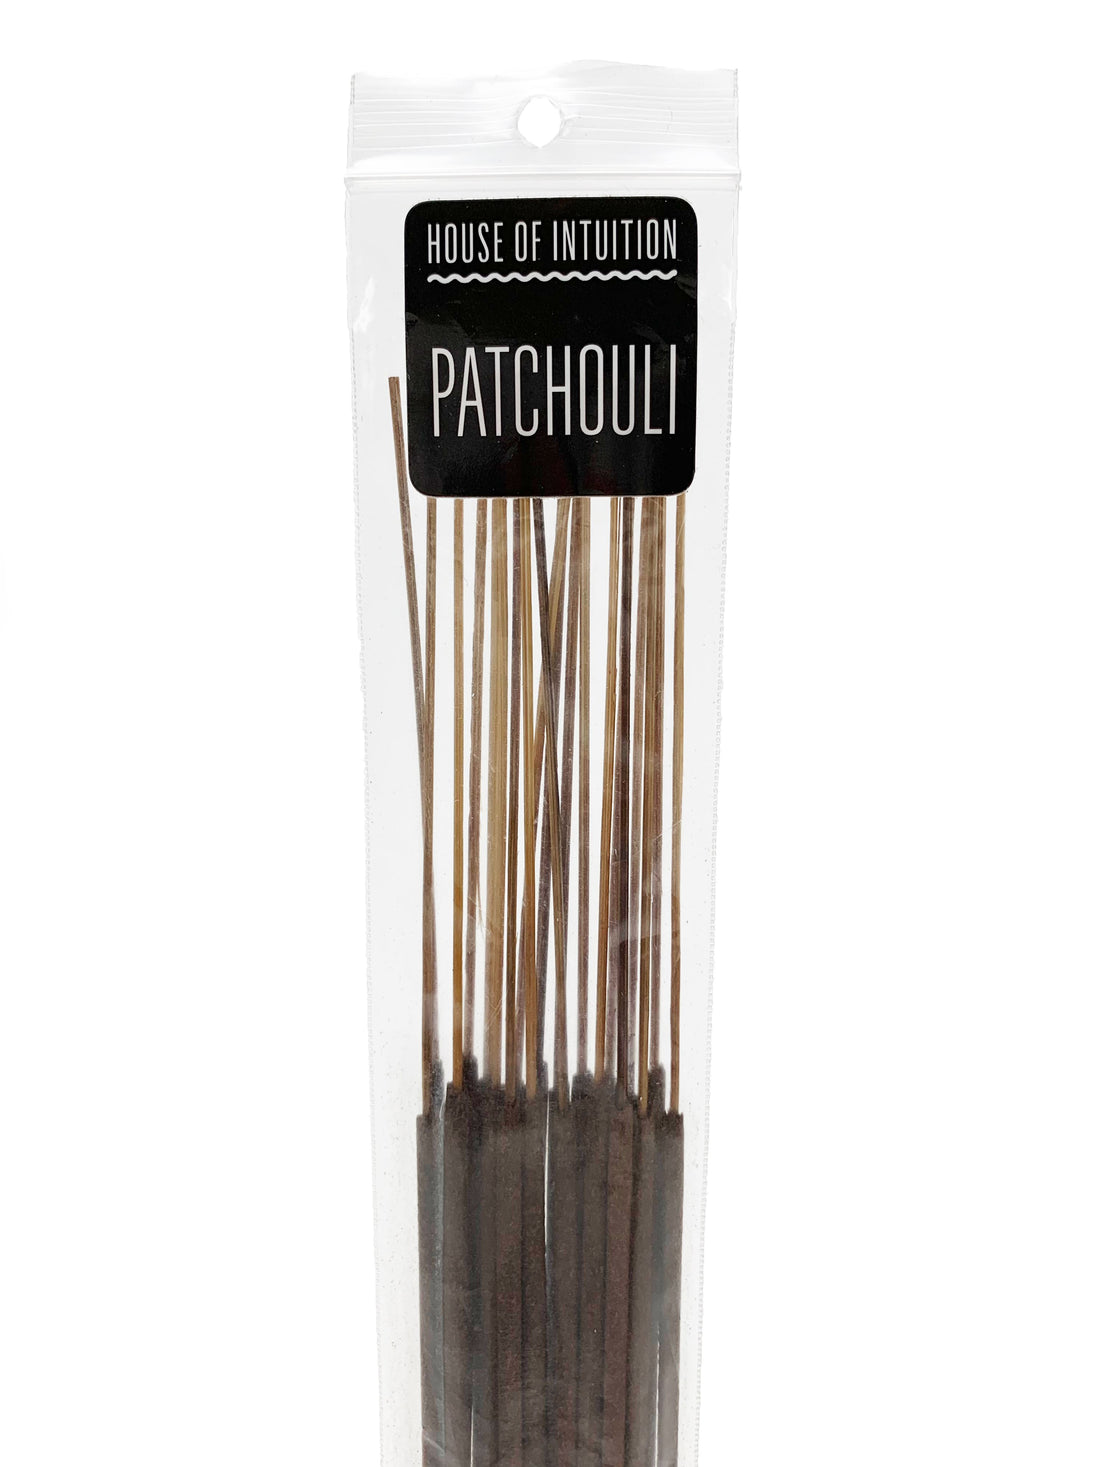 Patchouli Incense HOI Incense Sticks House of Intuition 